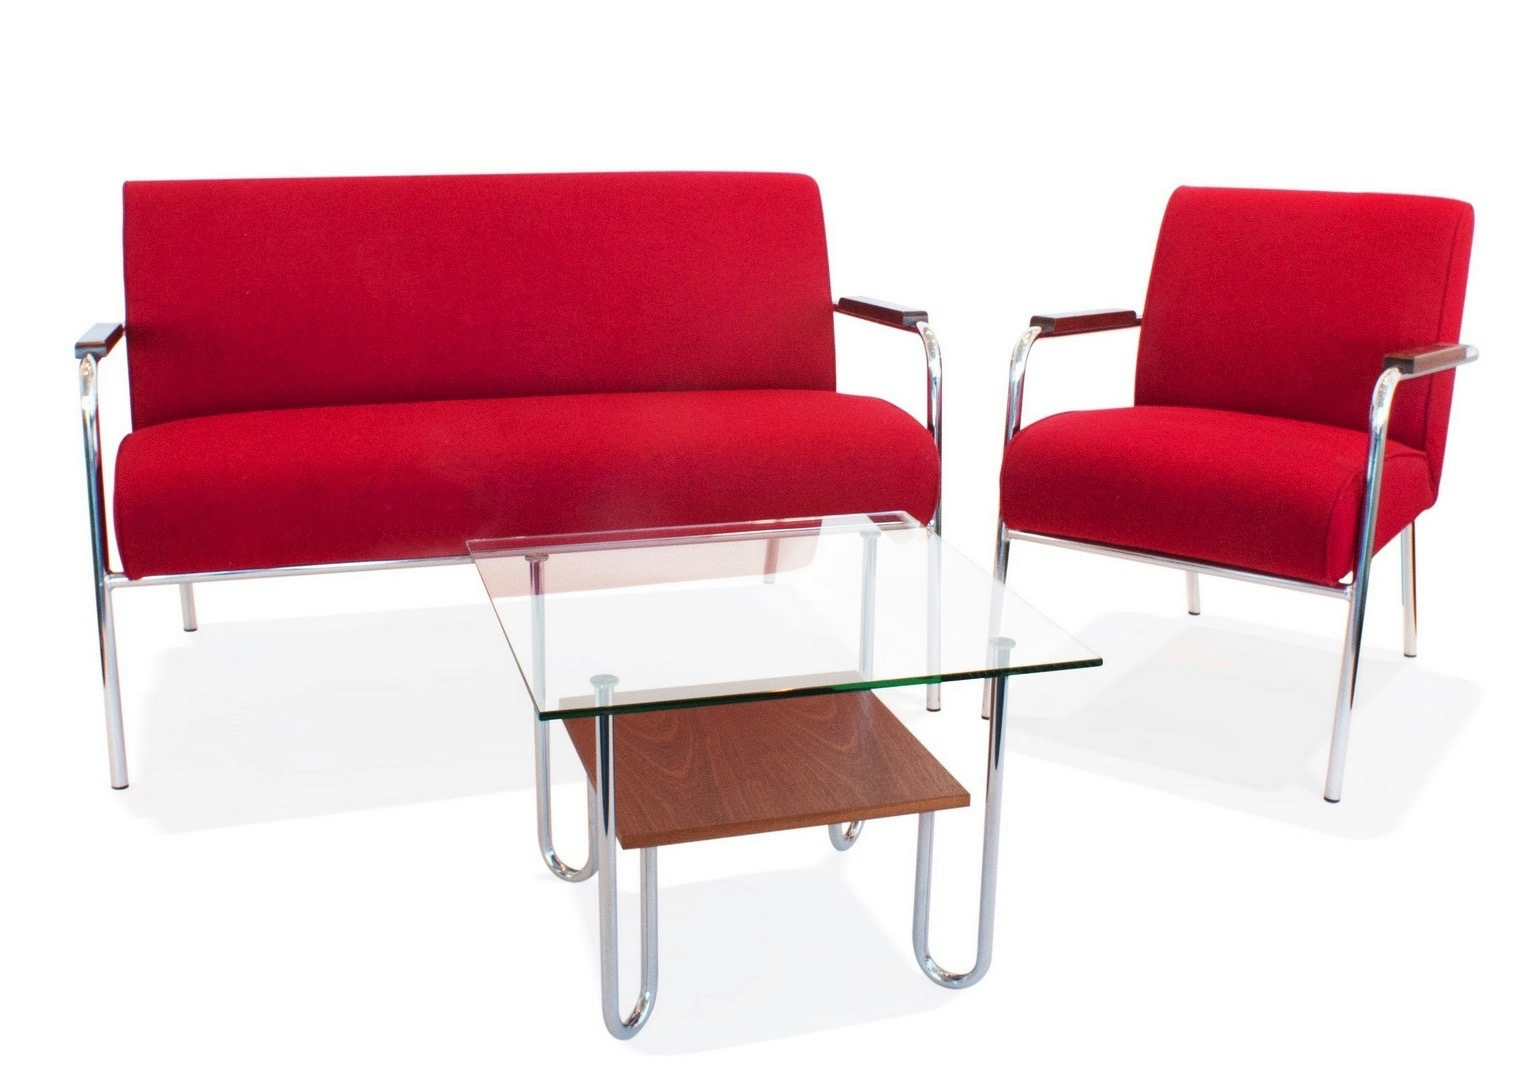 Venta chair for Sólóhúsgögn Furniture - Premiered at DesignMarch 2013